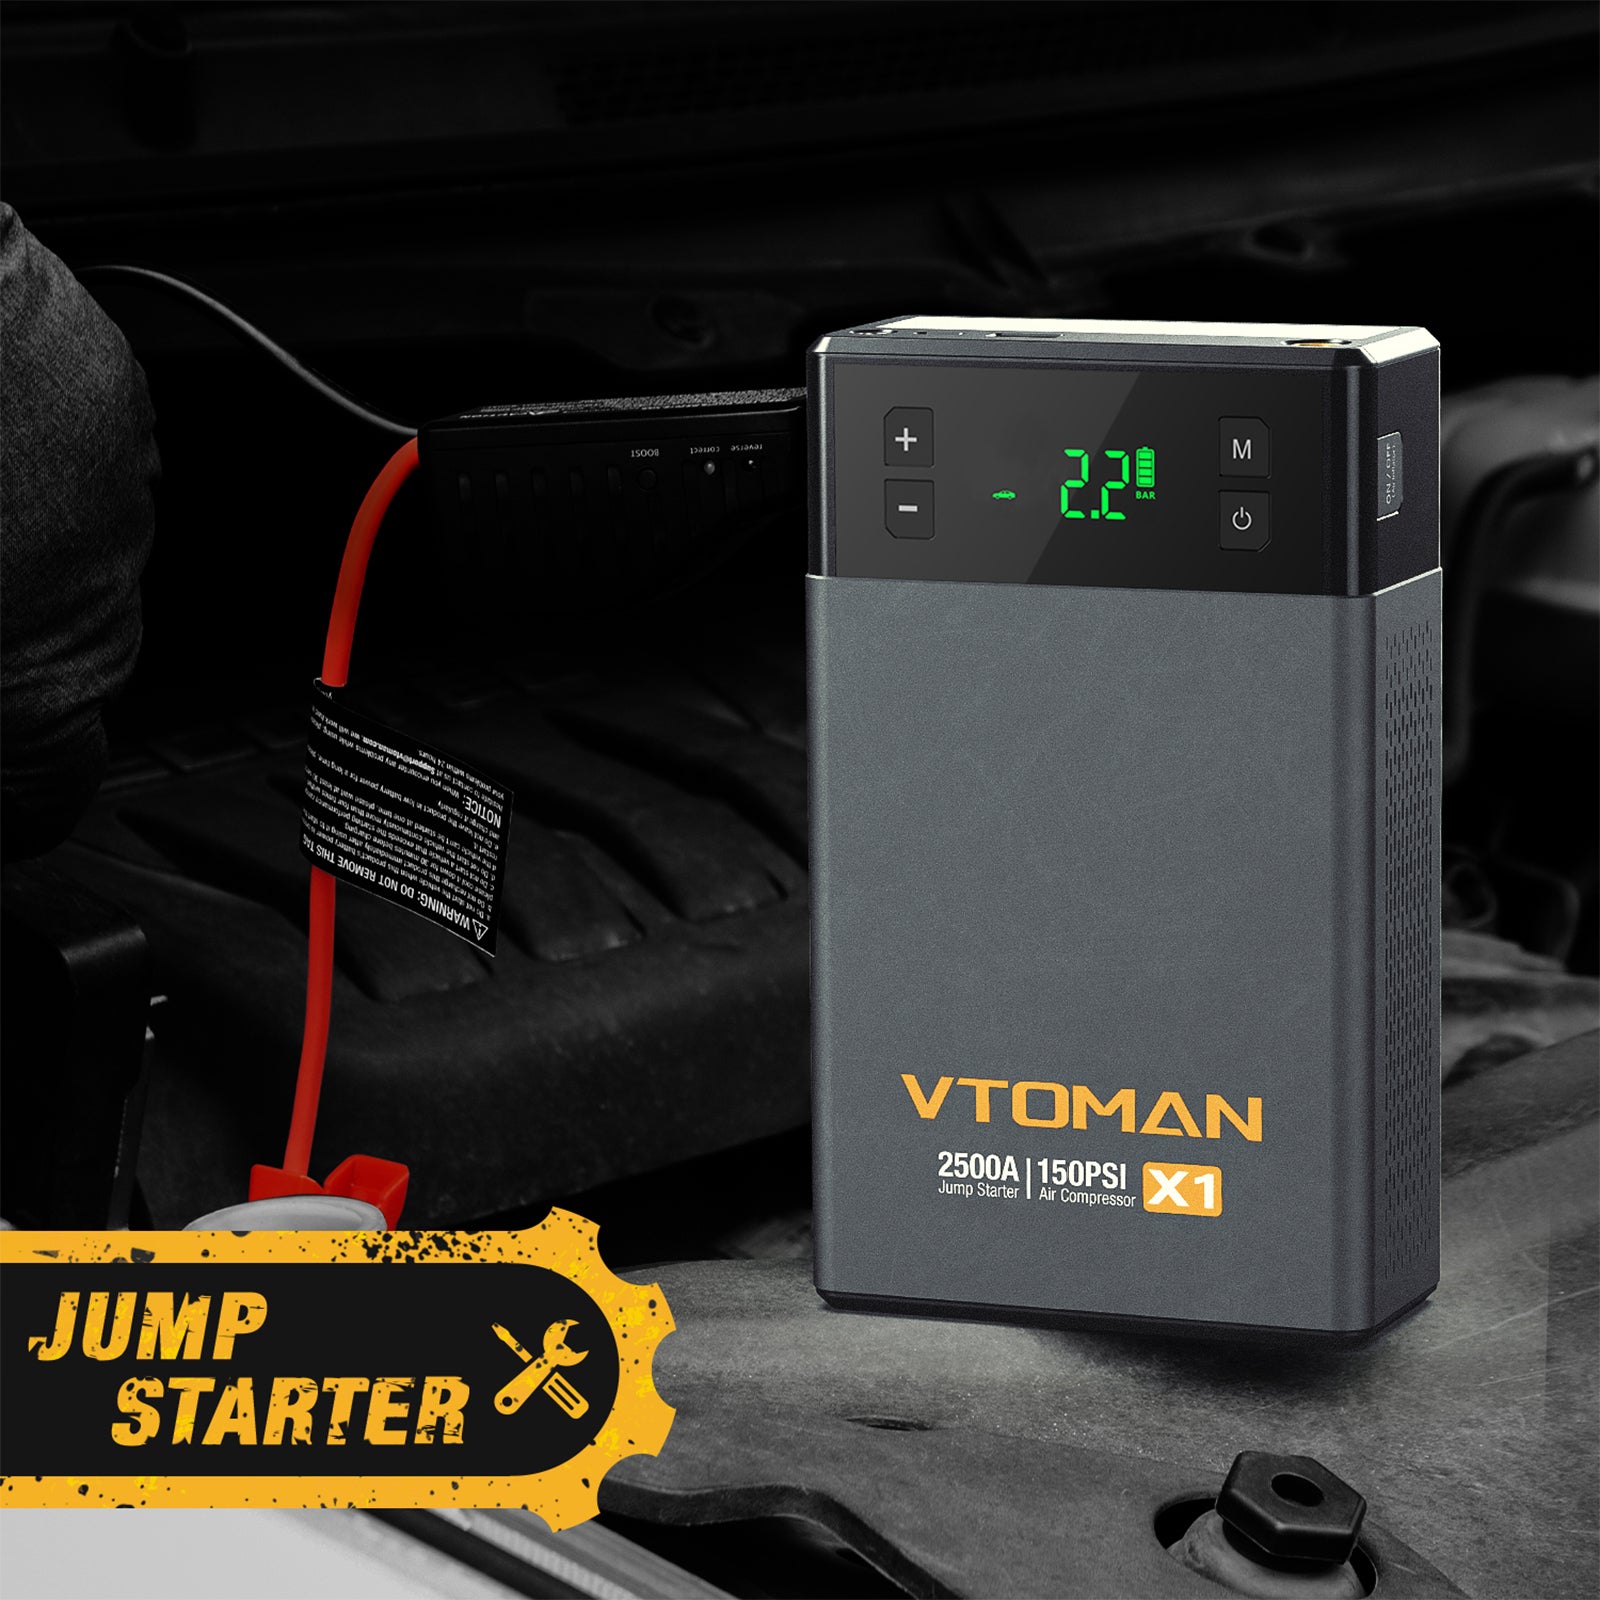 vtoman x1 jump starter 2500A-66.6Wh capacity